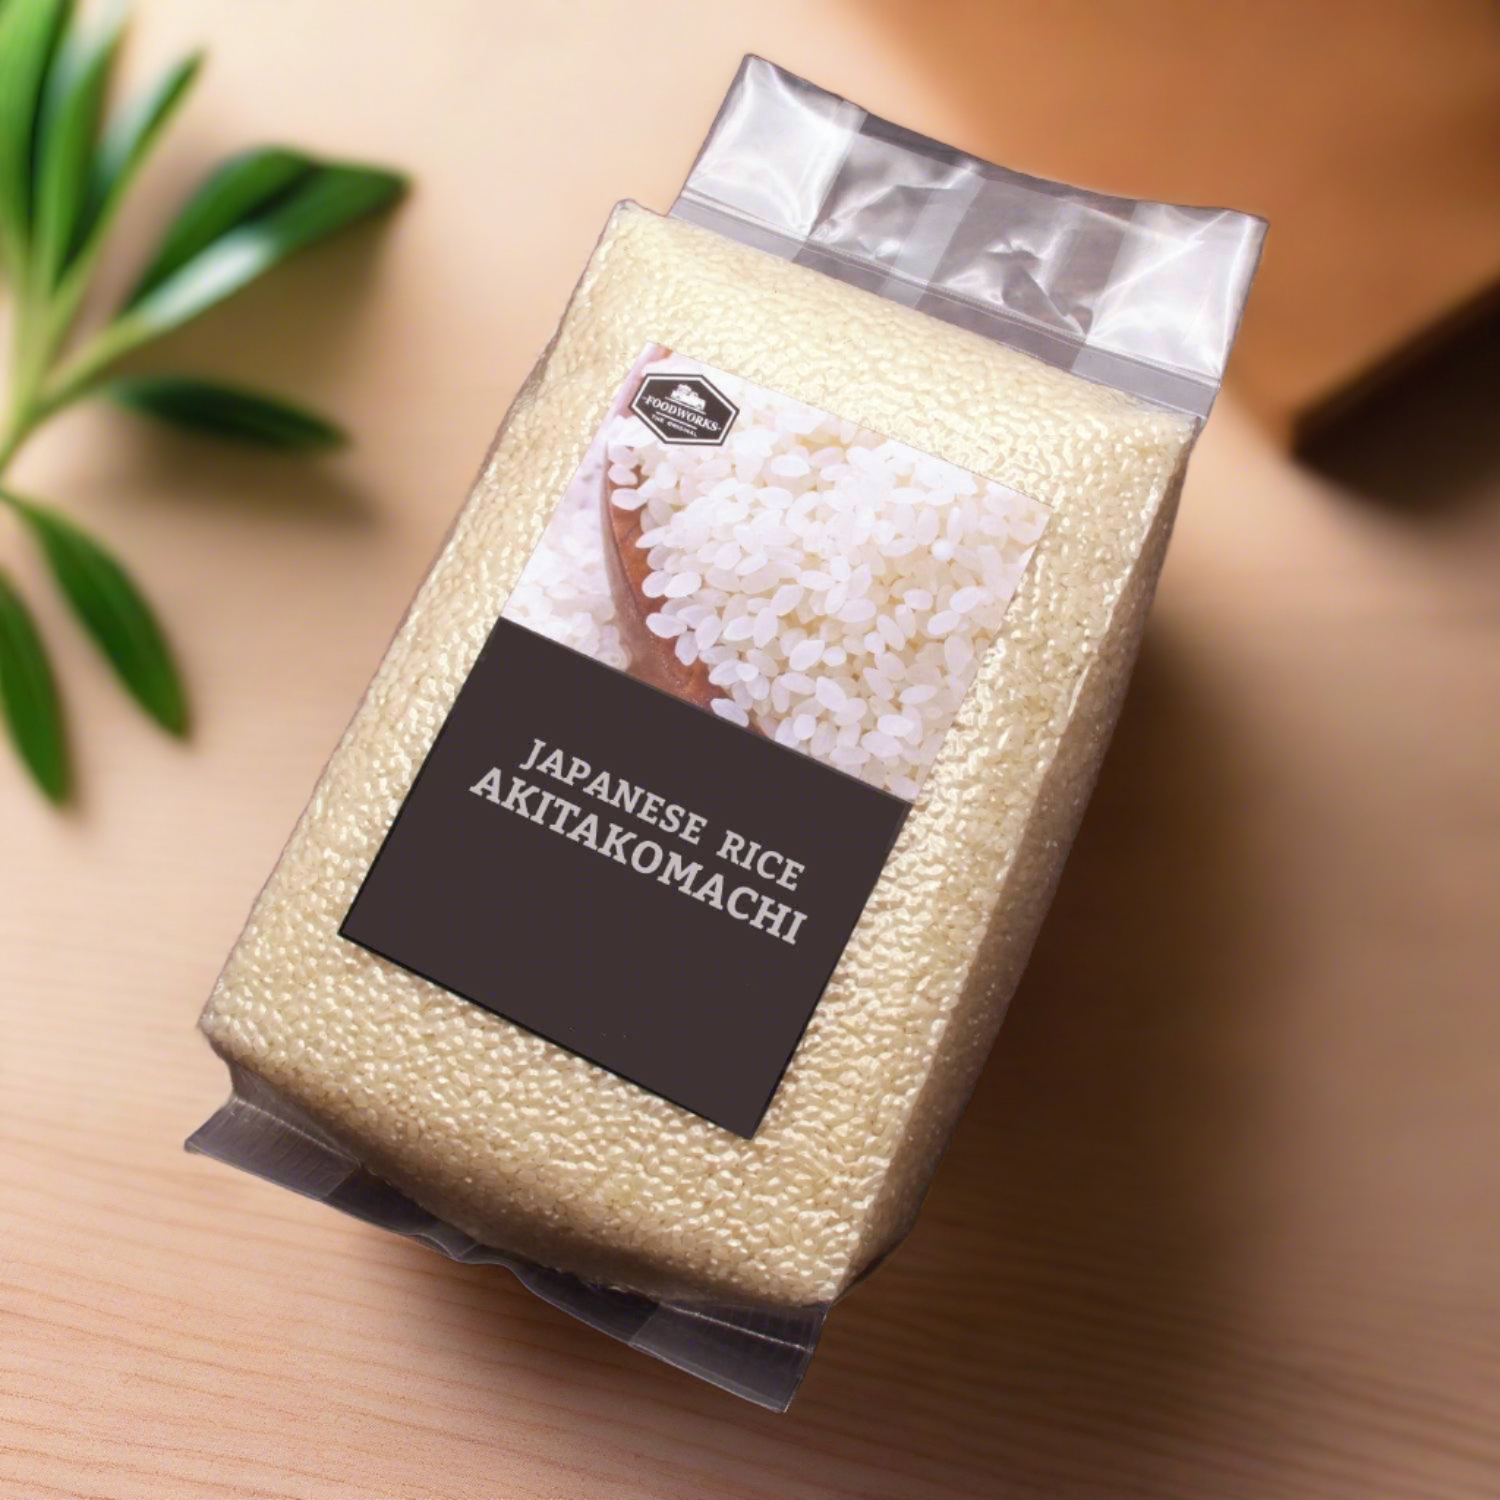 "Akitakomachi" Japanese Rice ข้าวสารญี่ปุ่น สายพันธุ์อาคิตะโคมาชิ - The Foodworks 